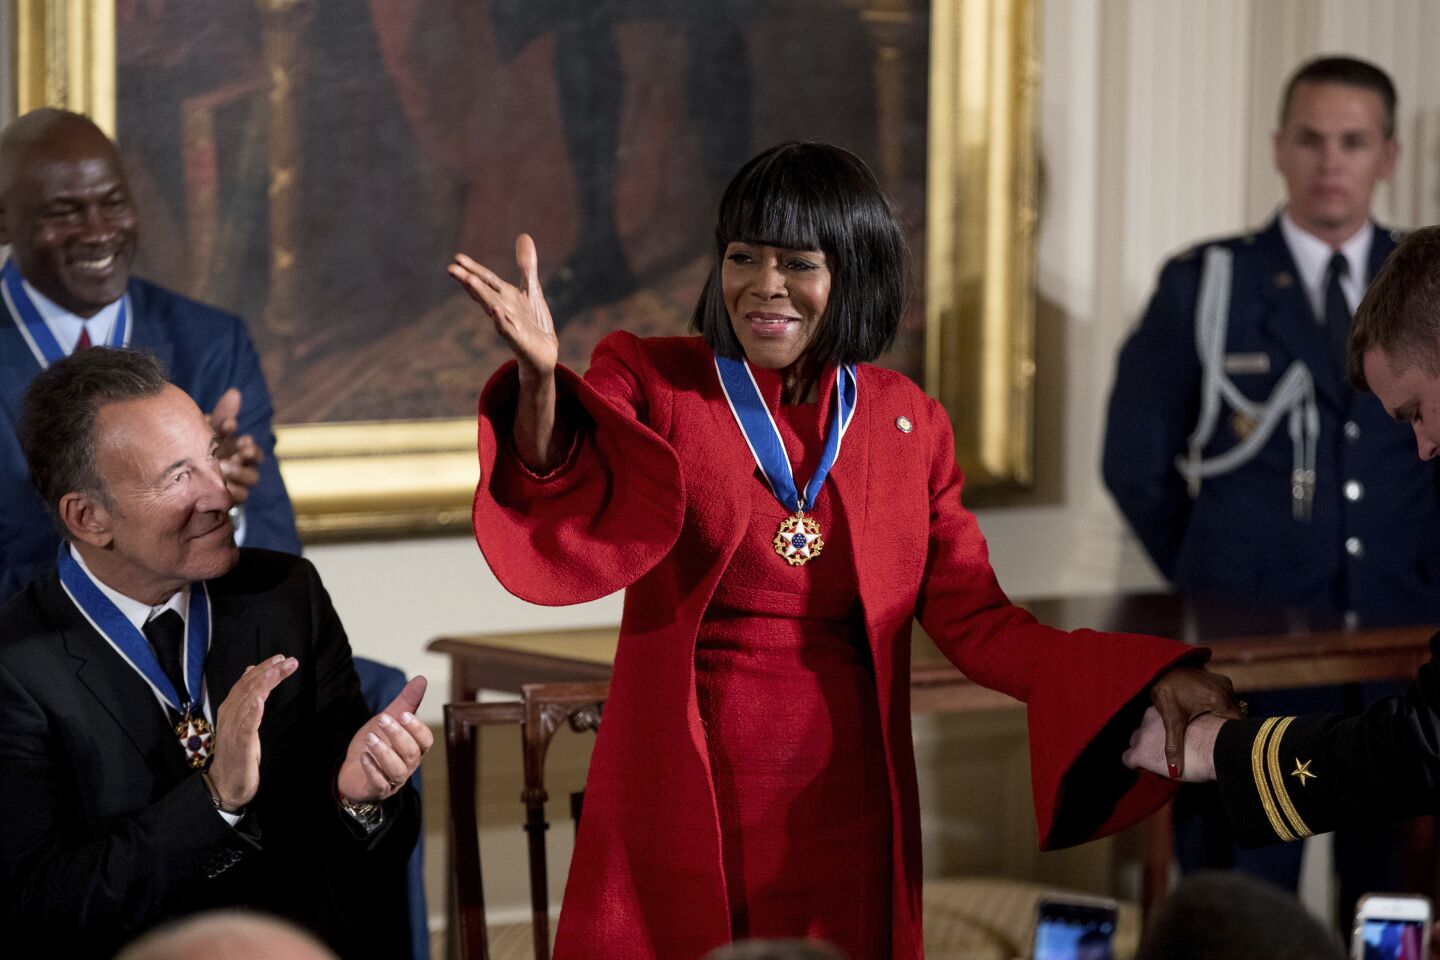 Obama Medal of Freedom